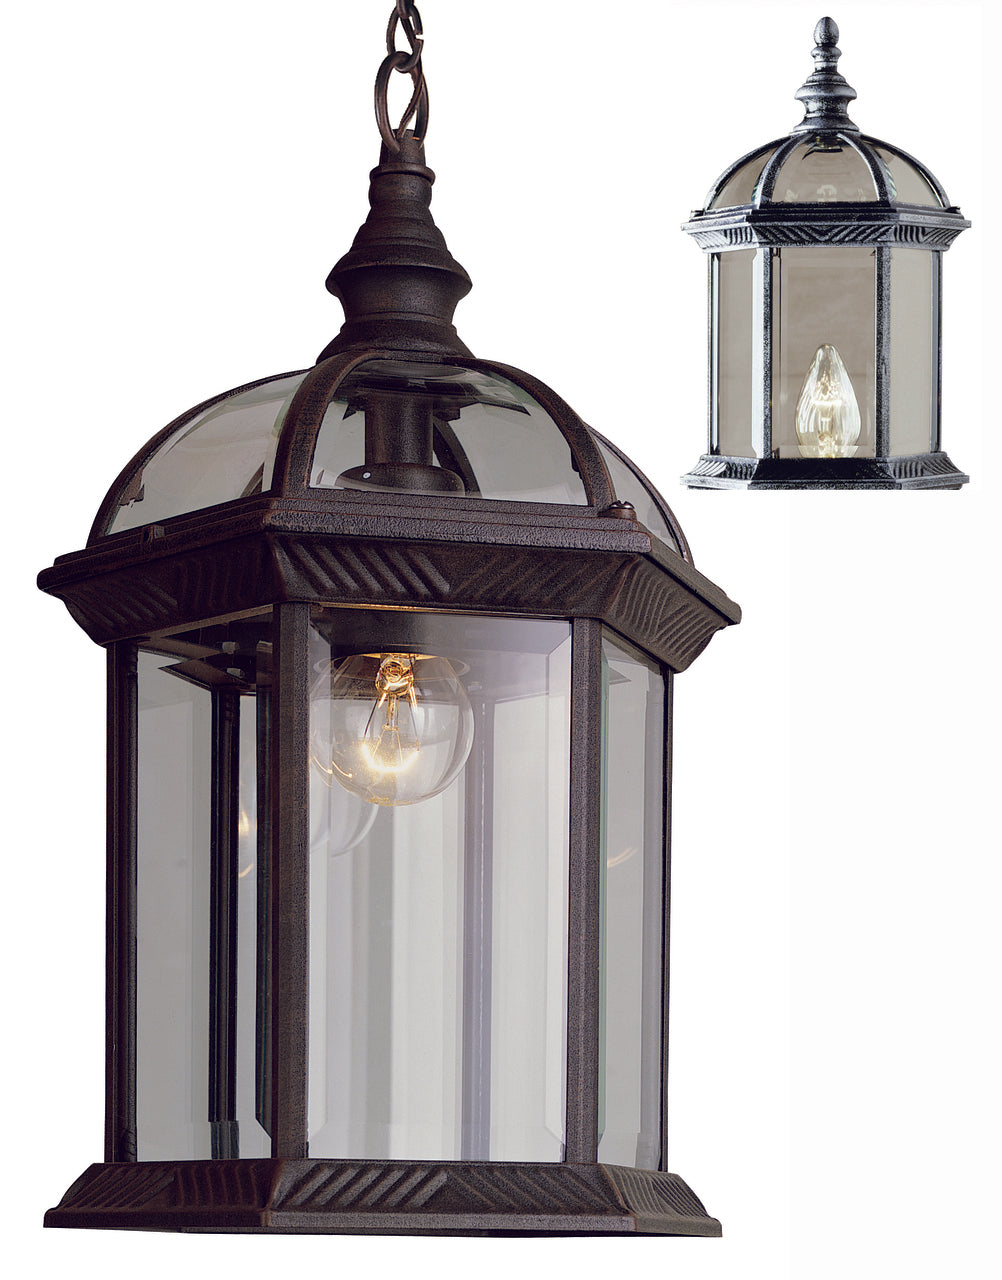 Trans Globe Lighting 4183 SWI Wentworth 17.5" Outdoor Swedish Iron Traditional Hanging Lantern with Beveled Glass Sides